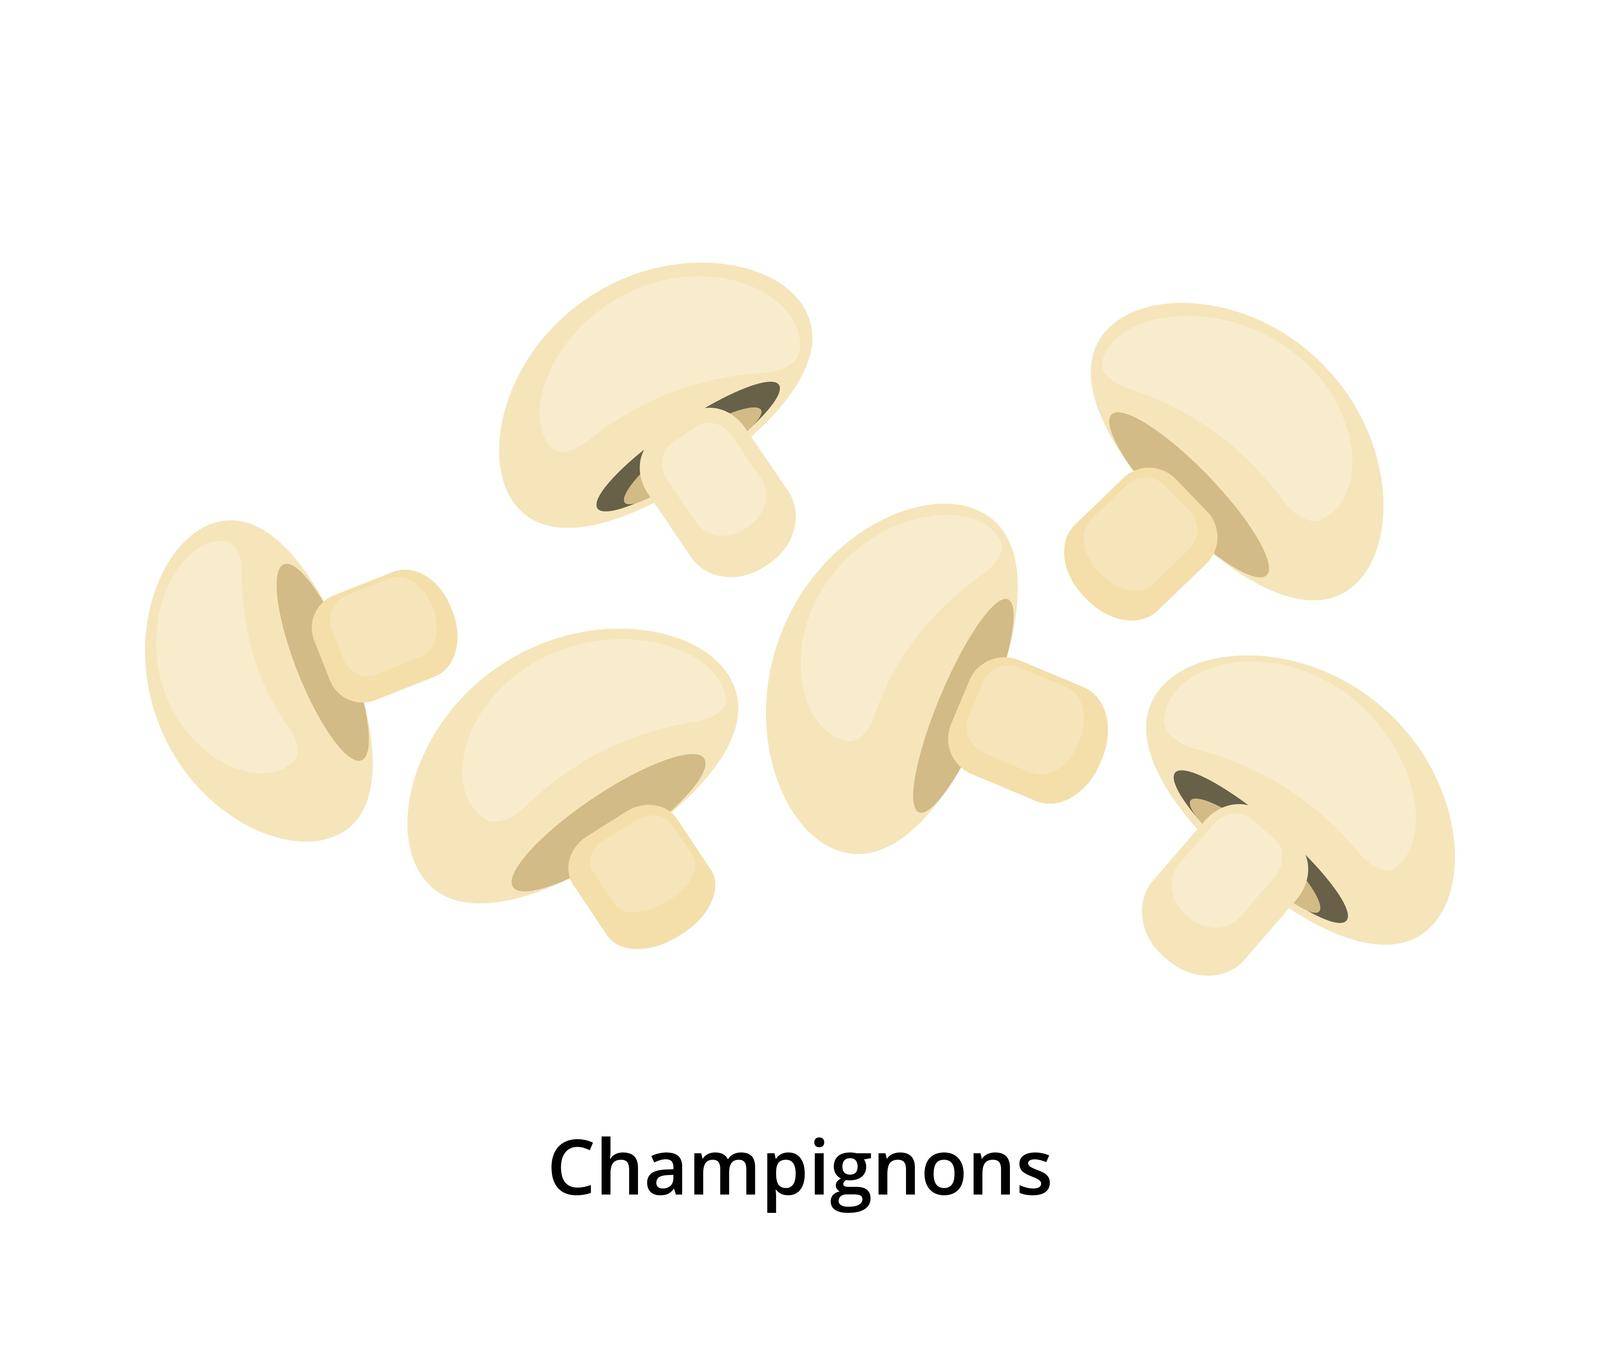 Cartoon champignons. by Minur